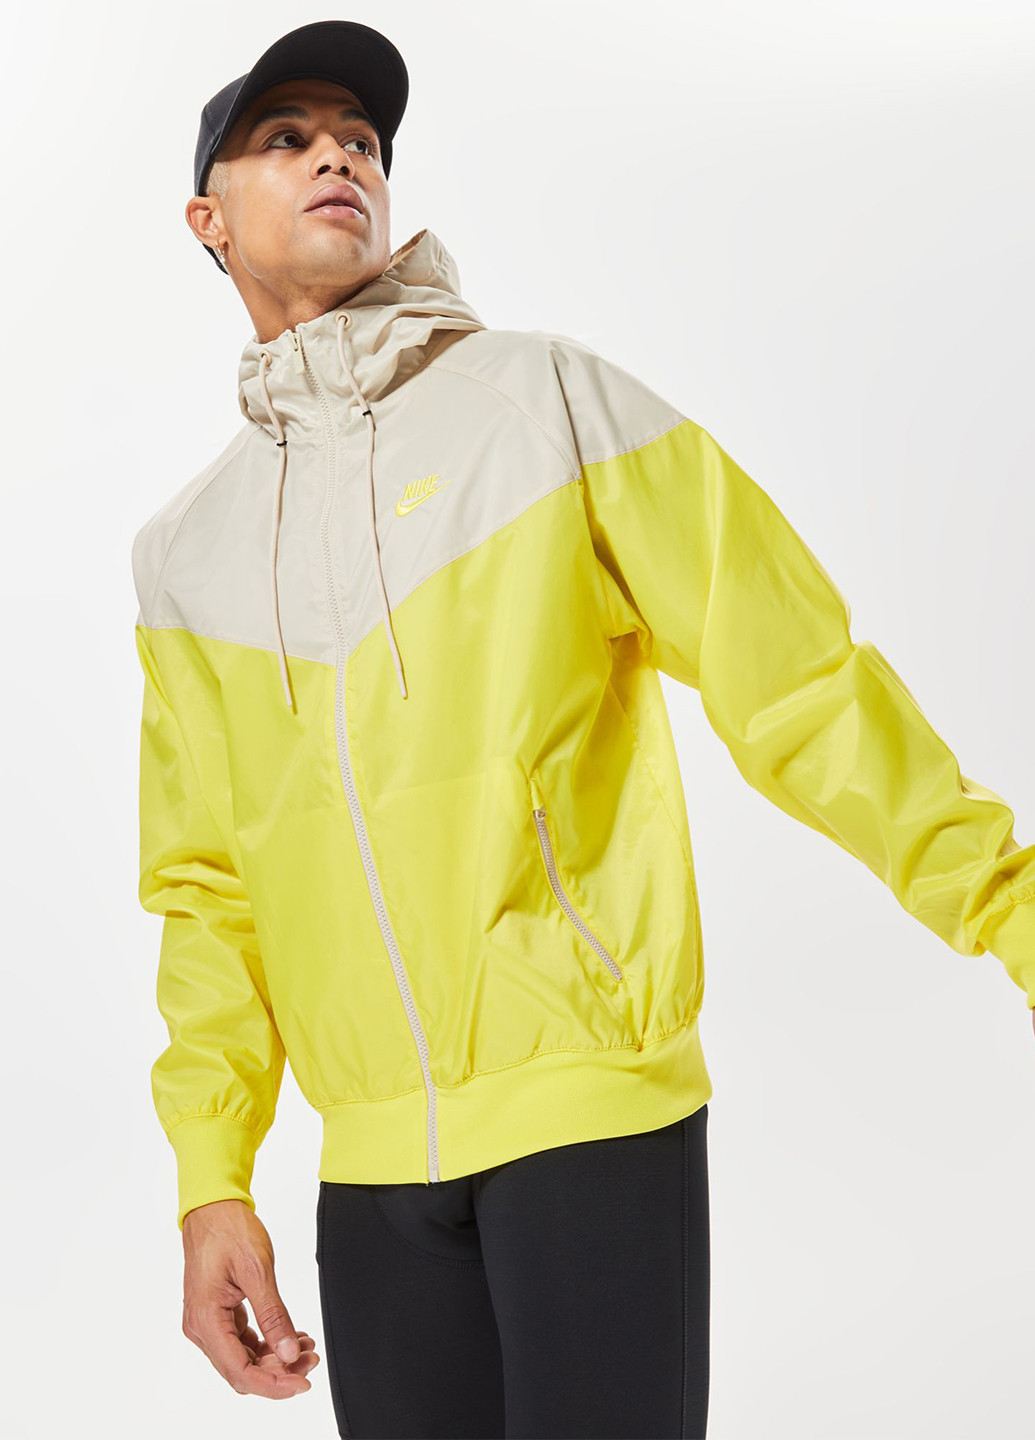 Жовта демісезонна куртка Nike SPORTSWEAR WINDRUNNER